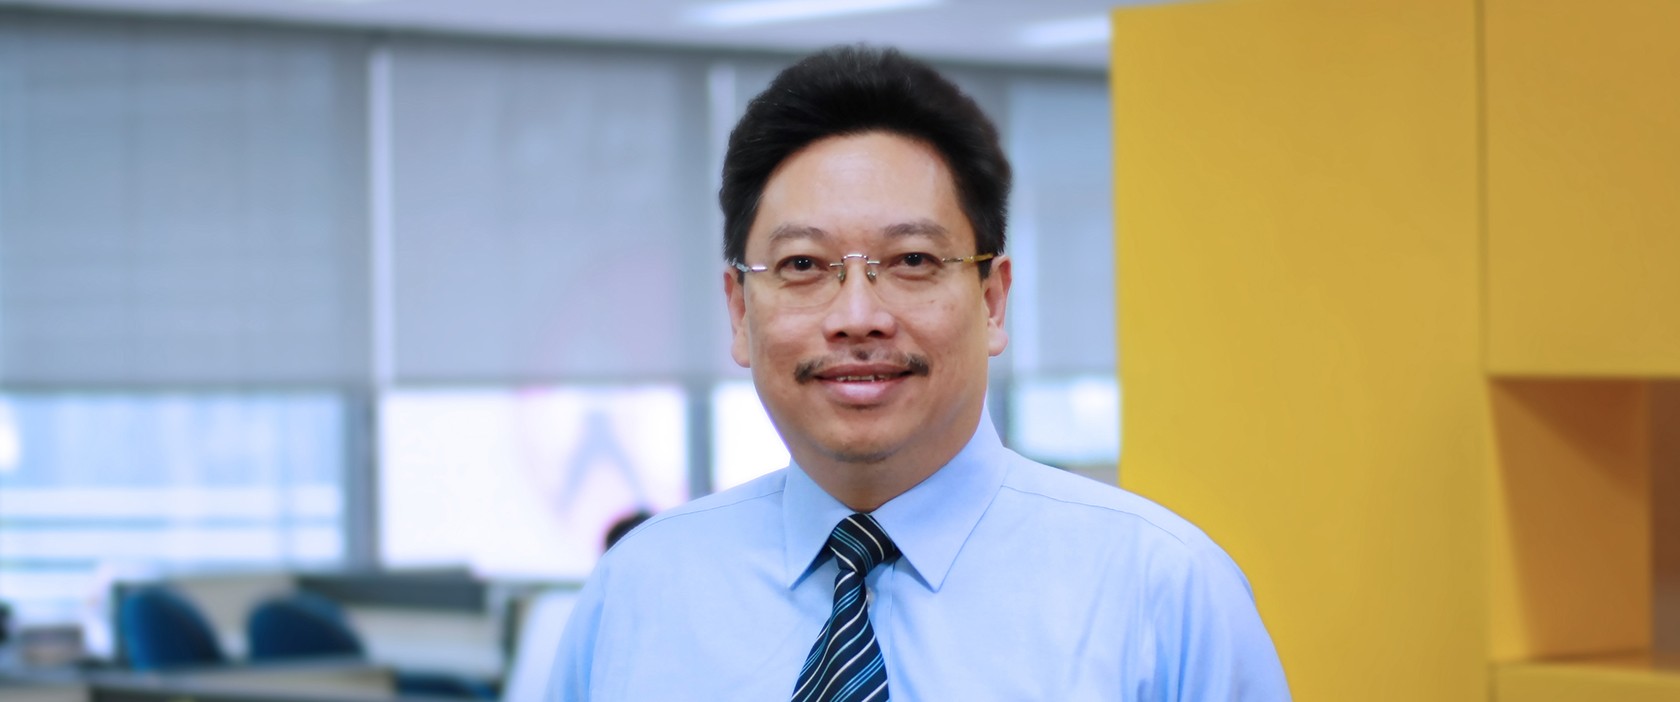 Benediktio Salim - EY Indonesia Assurance Services Partner